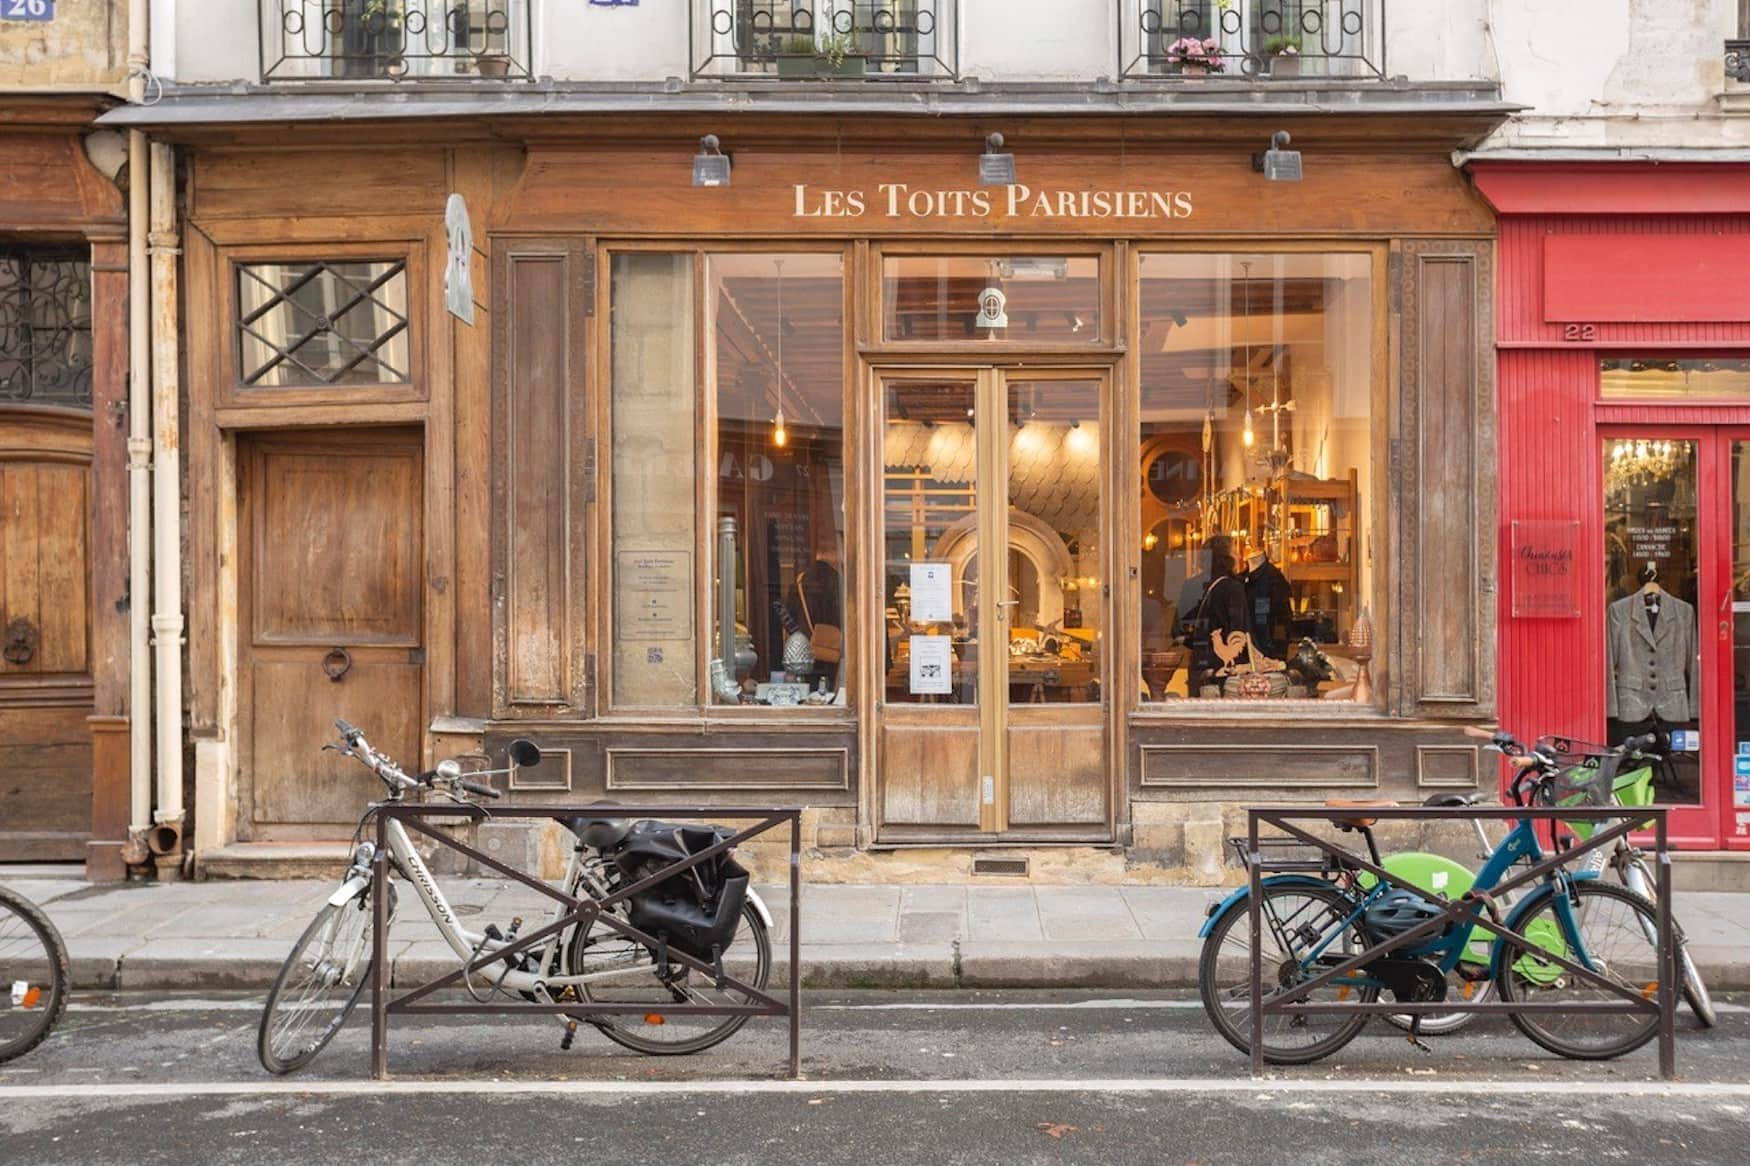 Ladenfront in Paris